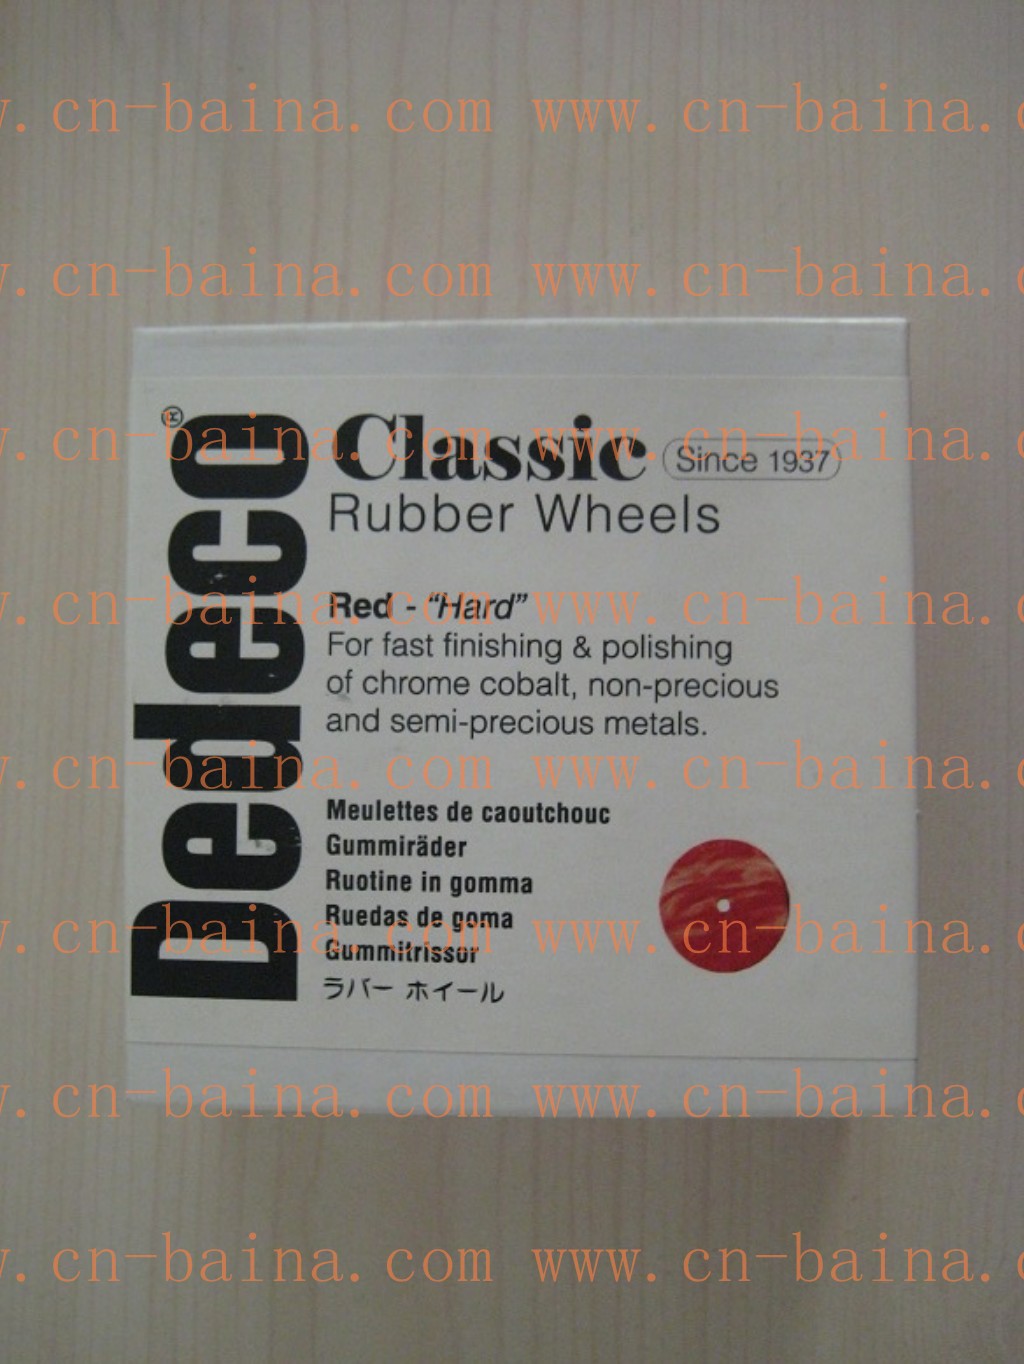 DEDECO classic rubber wheel red color hardest